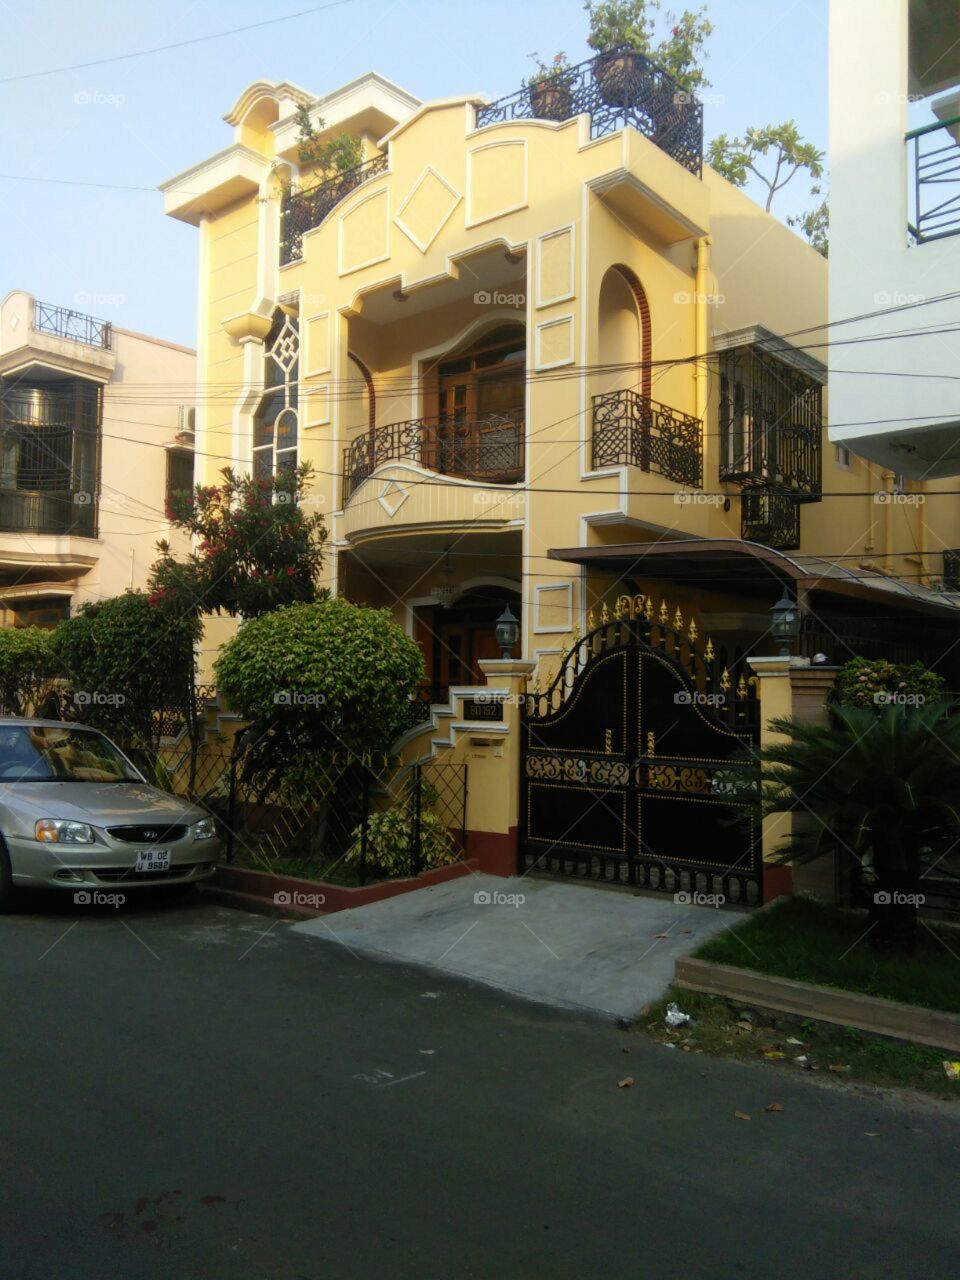 my residential house in kolkata